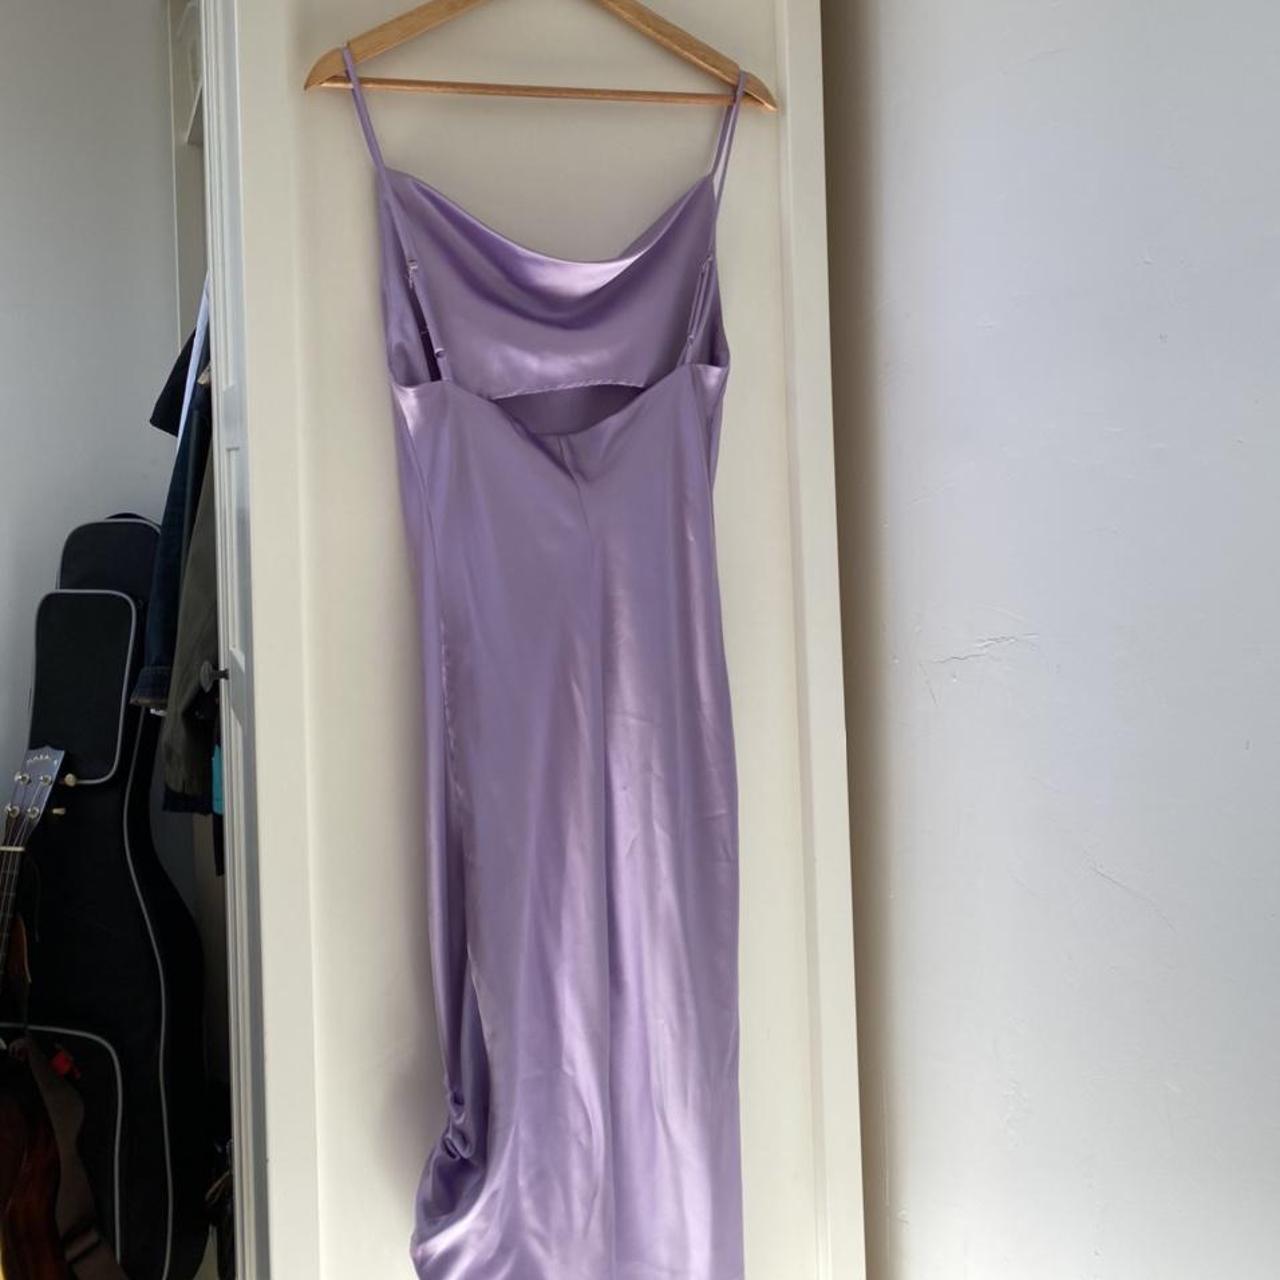 WHYTE VALENTYNE SLIP MIDI DRESS This lavender dress... - Depop